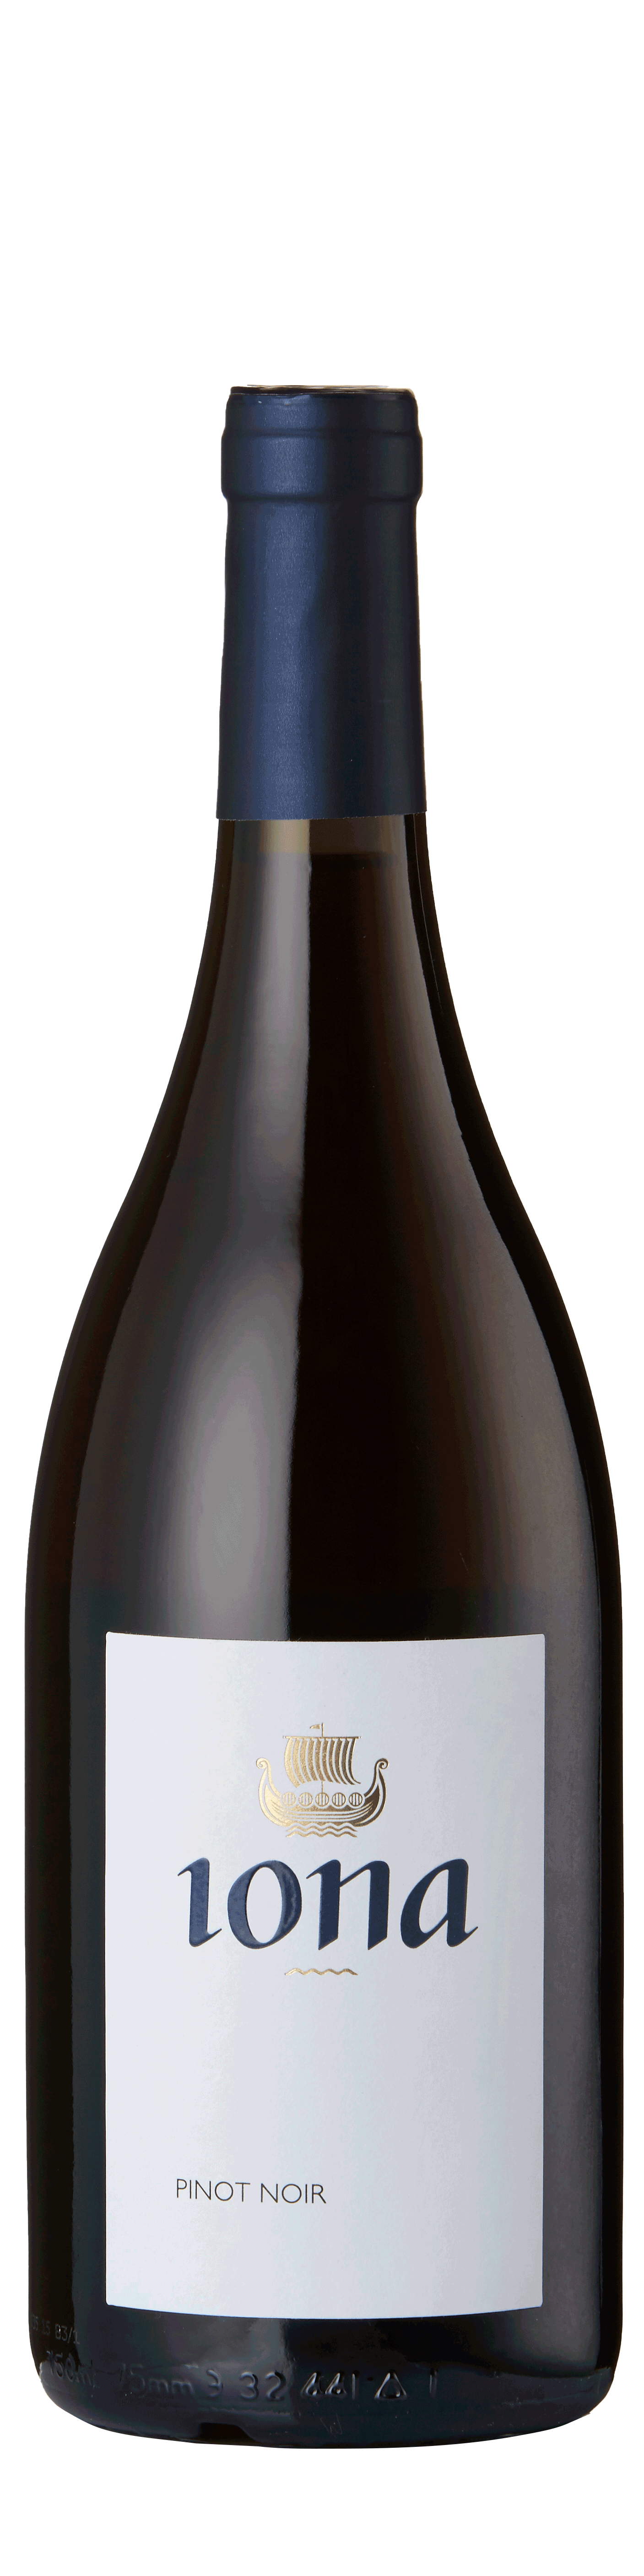 Bottle shot - Iona, Pinot Noir, Elgin, South Africa